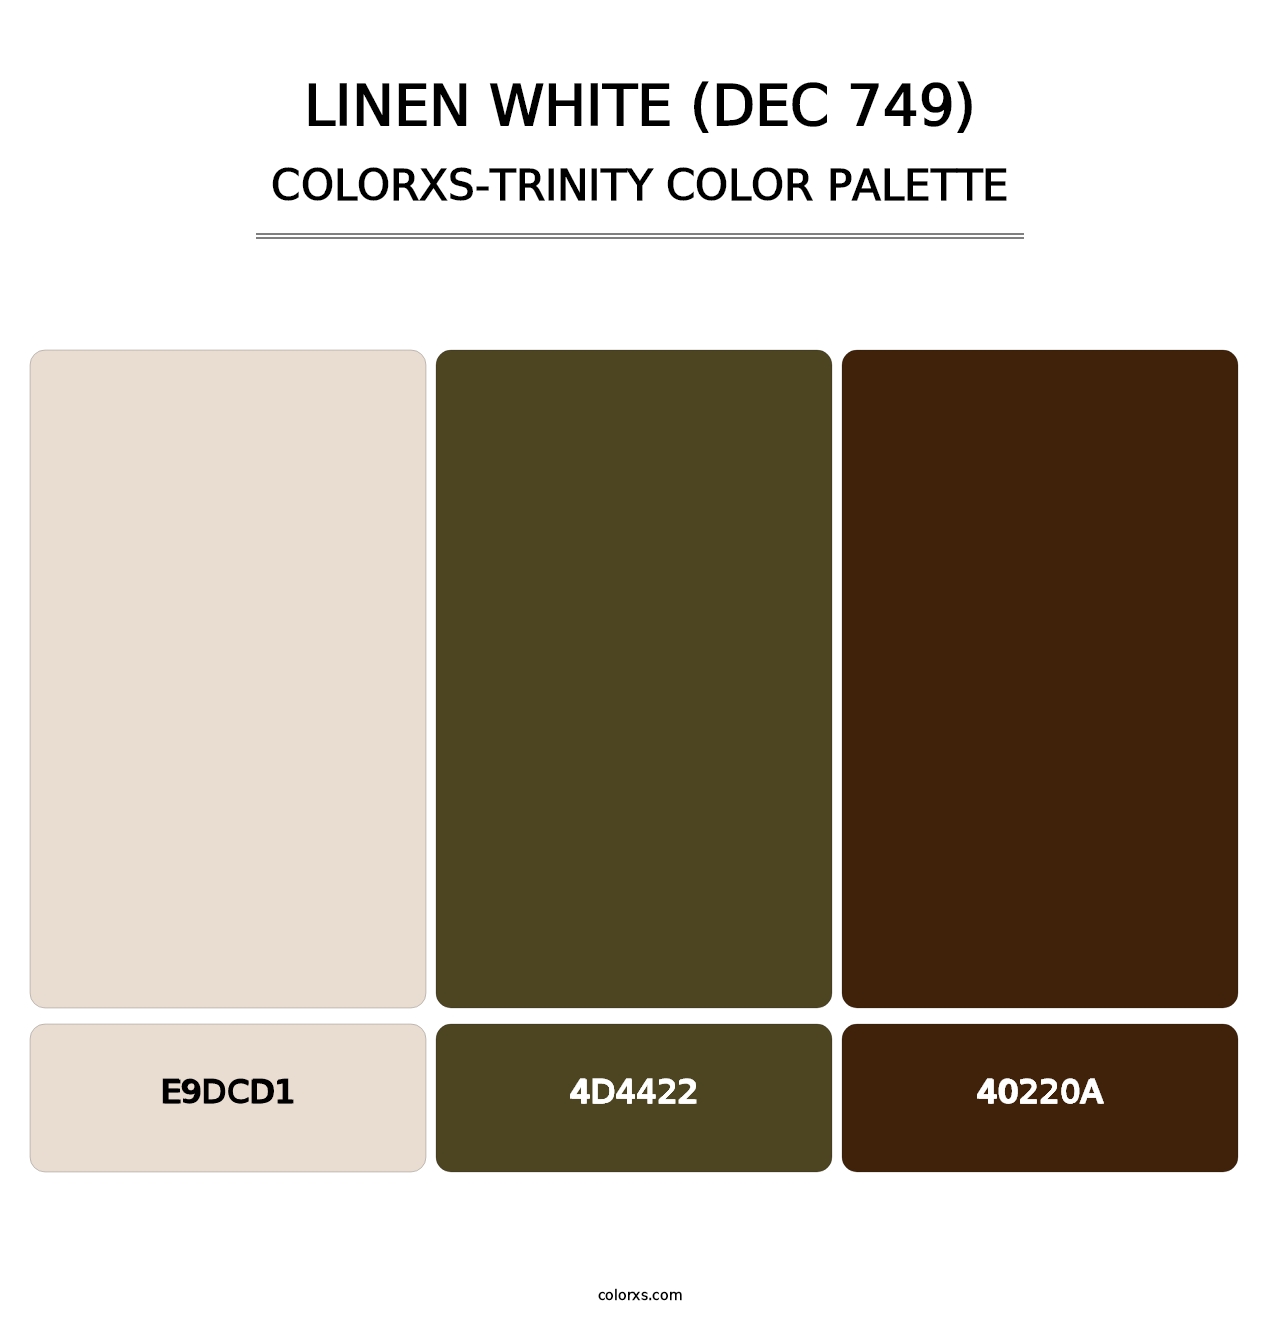 Linen White (DEC 749) - Colorxs Trinity Palette